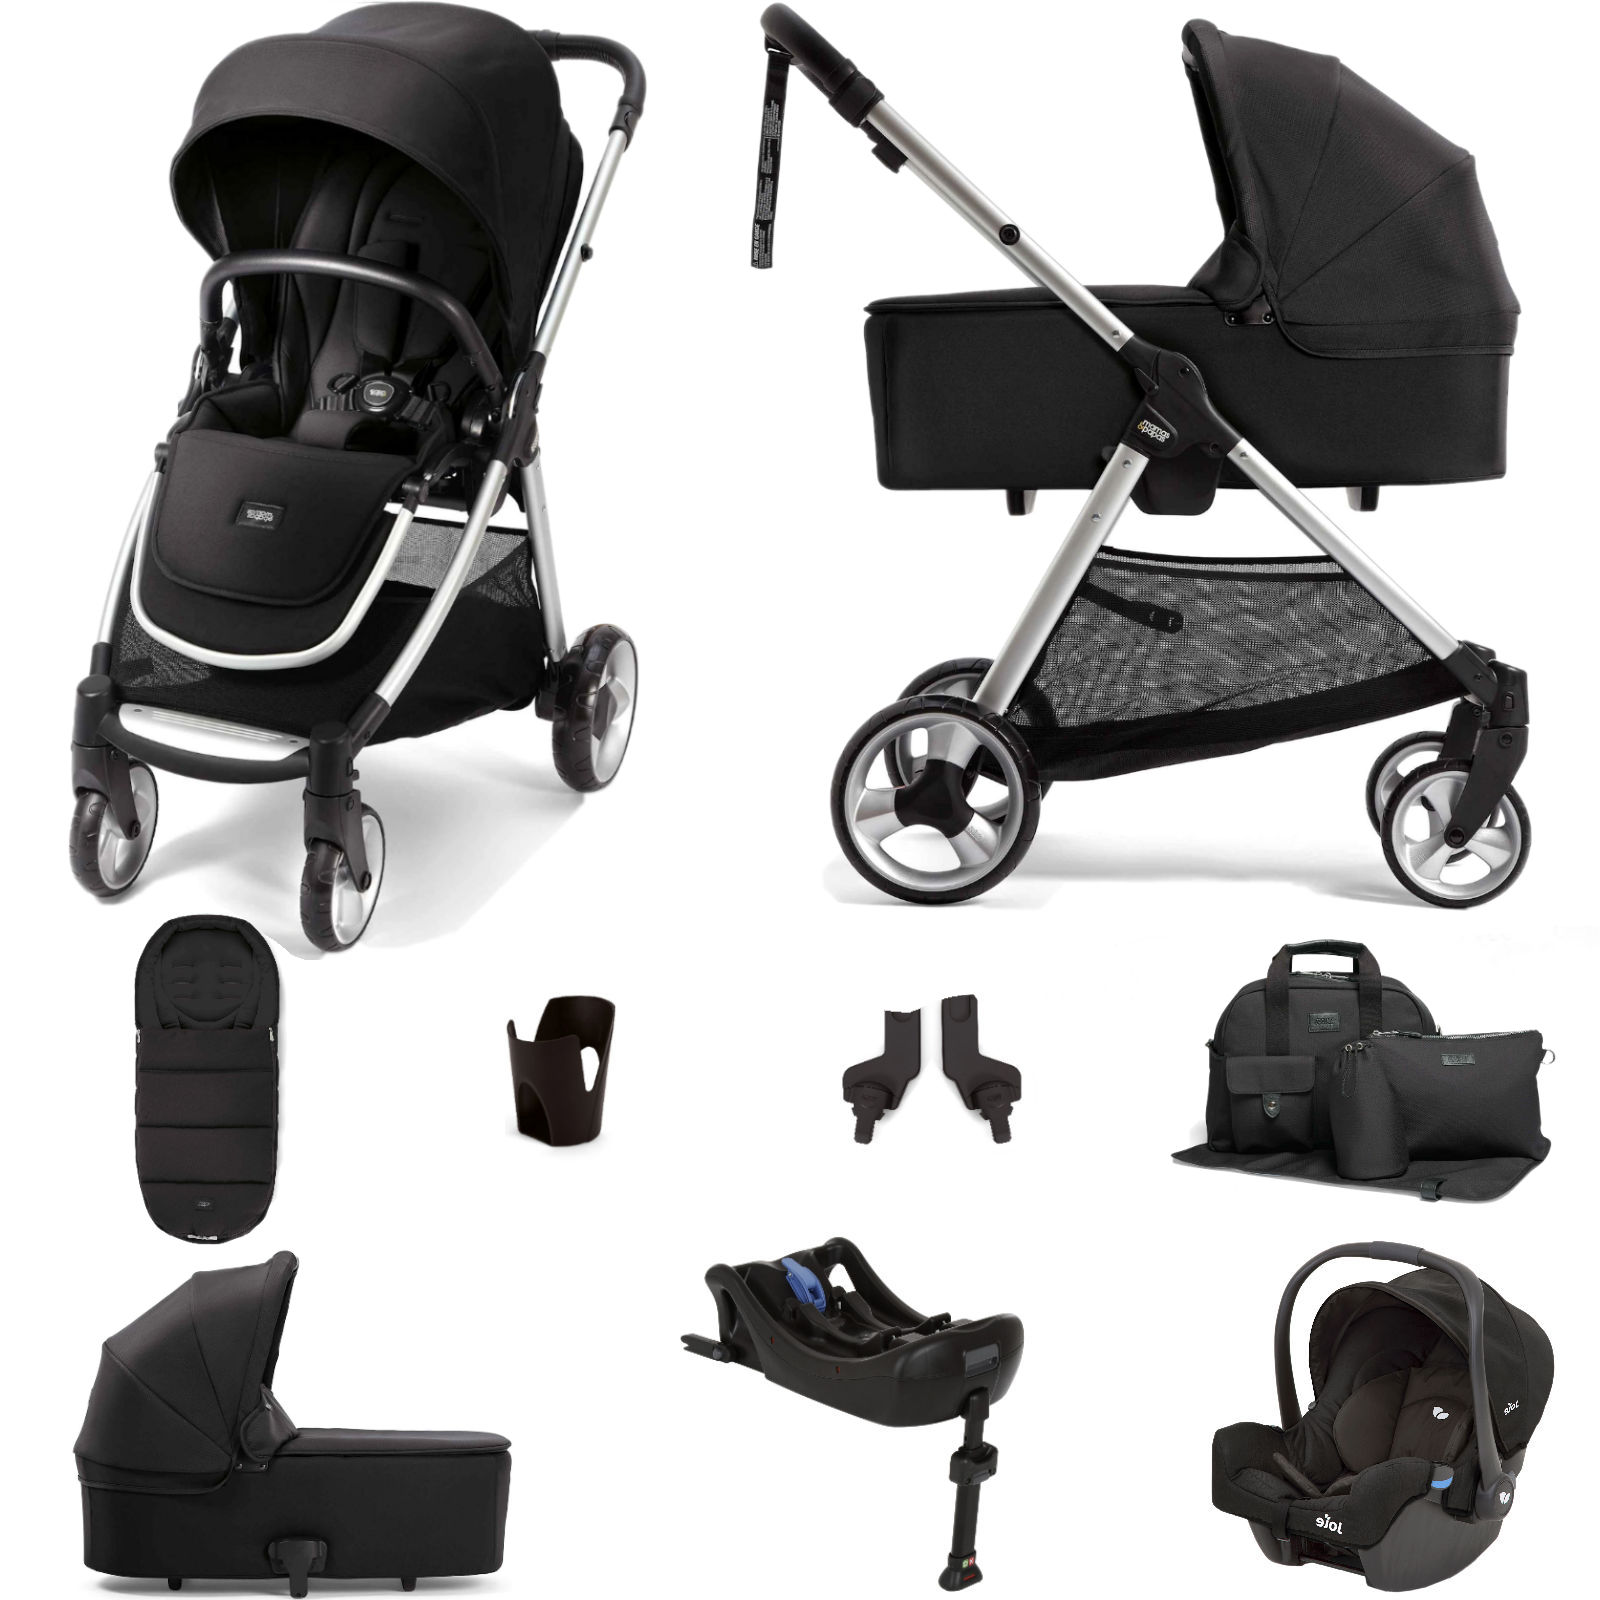 Mamas & Papas Flip XT2 8pc Essentials (Gemm Car Seat) Travel System with Carrycot & ISOFIX Base - Black